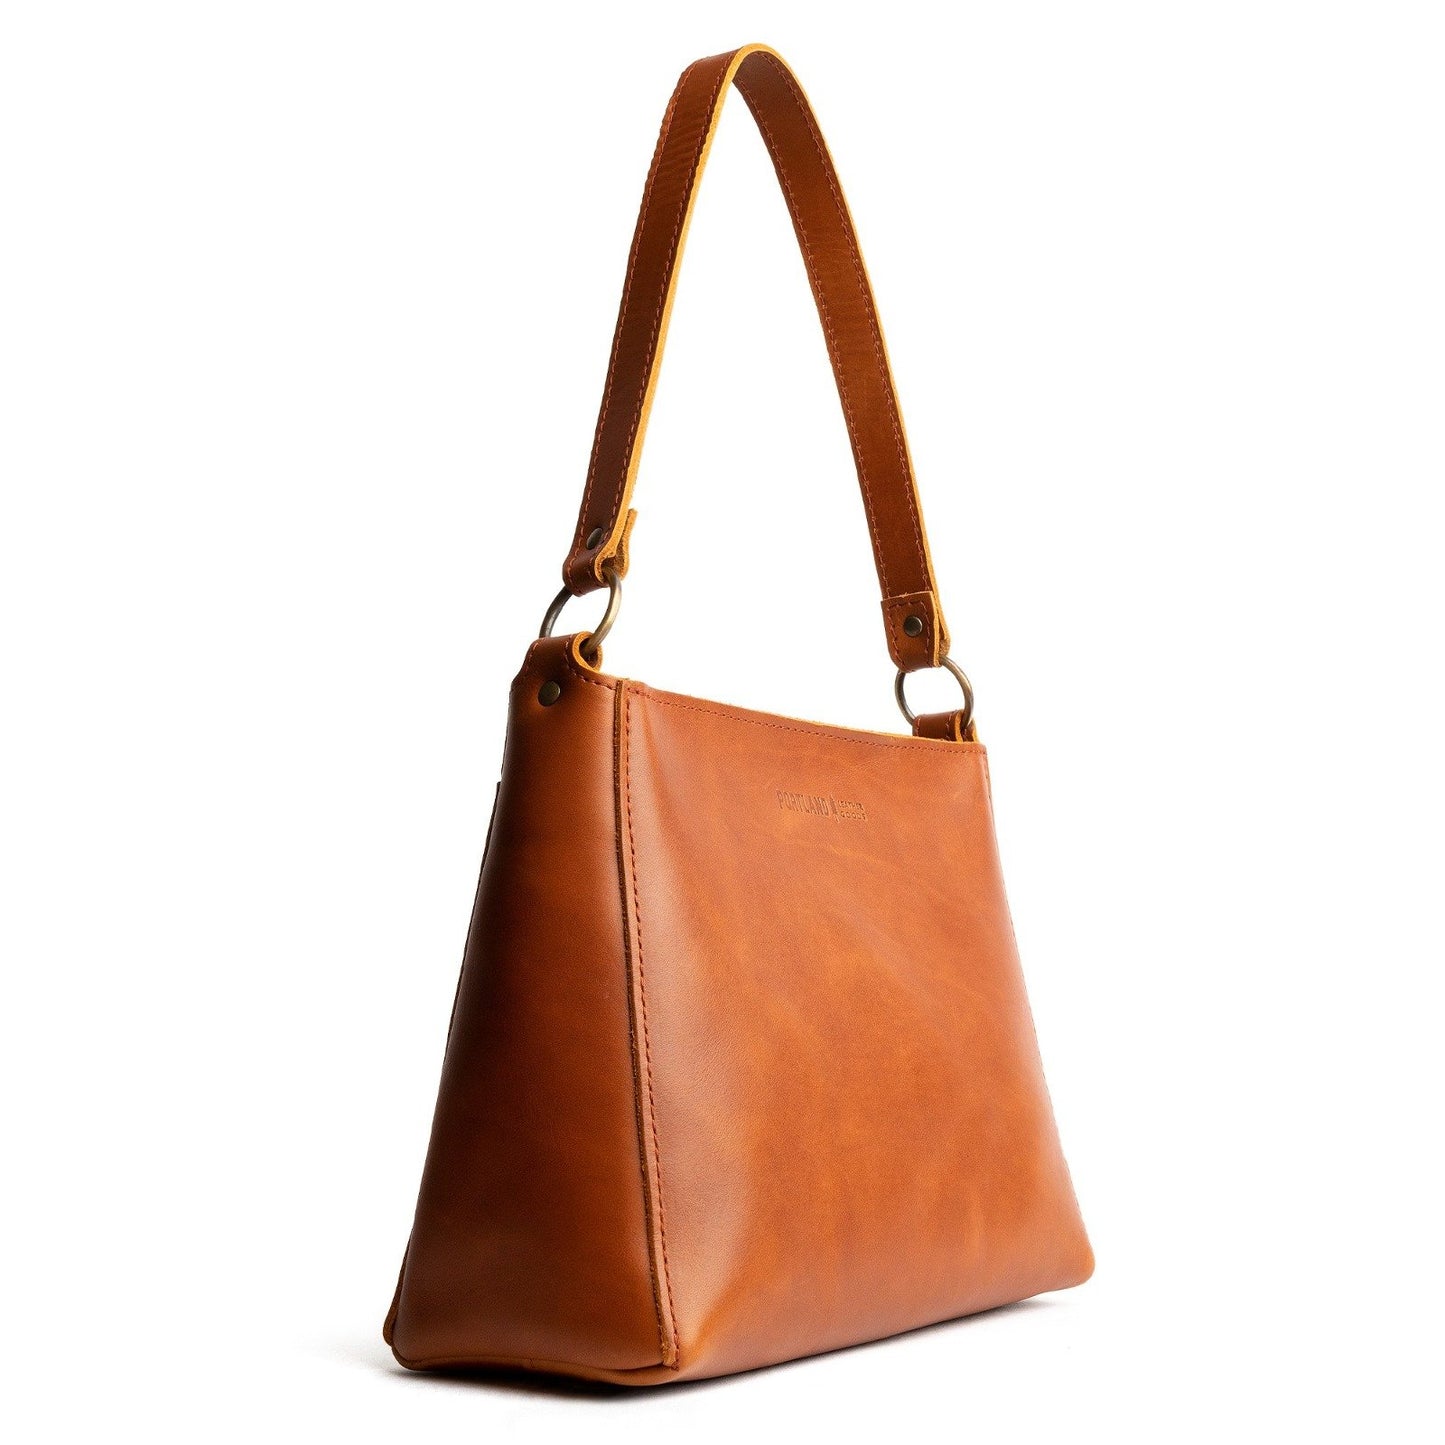 All Color: Honey | Triangle Leather Handmade Bag